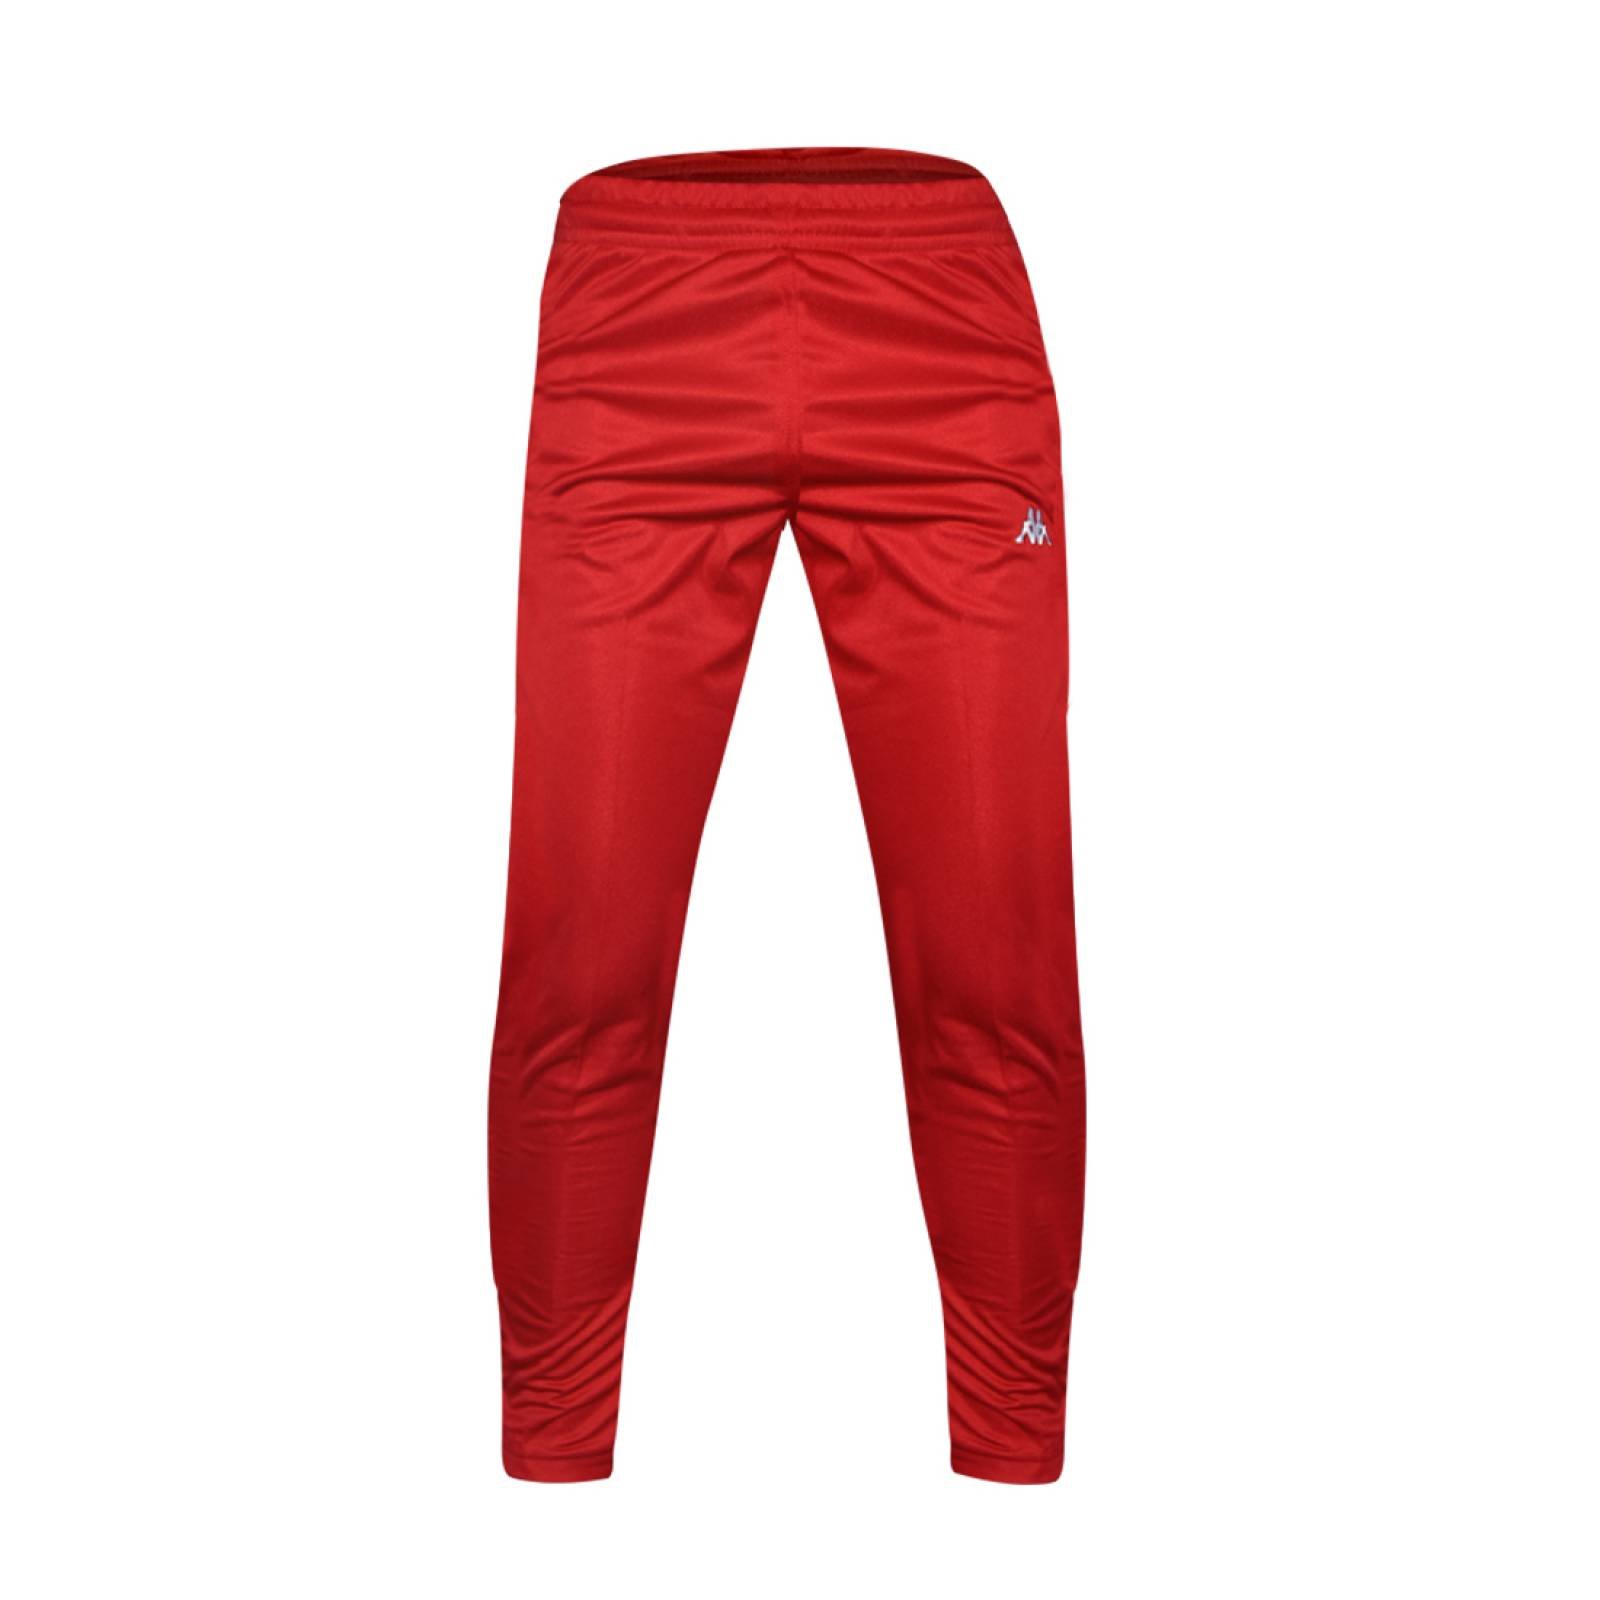 Pants Hombre Pantalon Caballero Deportivo Sport Rojo Kappa